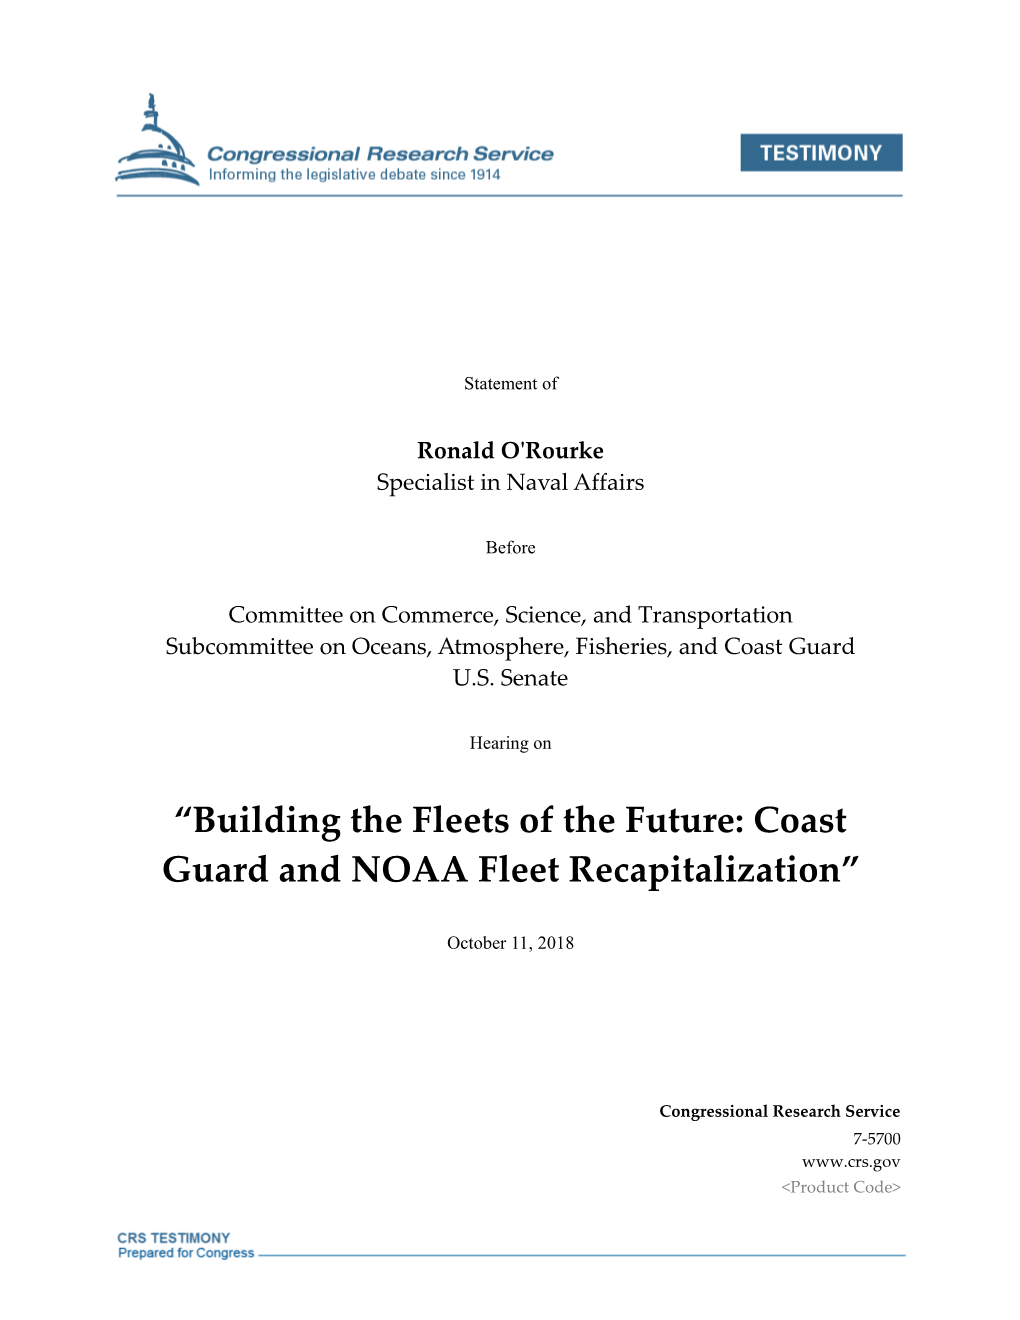 “Building the Fleets of the Future: Coast Guard and NOAA Fleet Recapitalization”